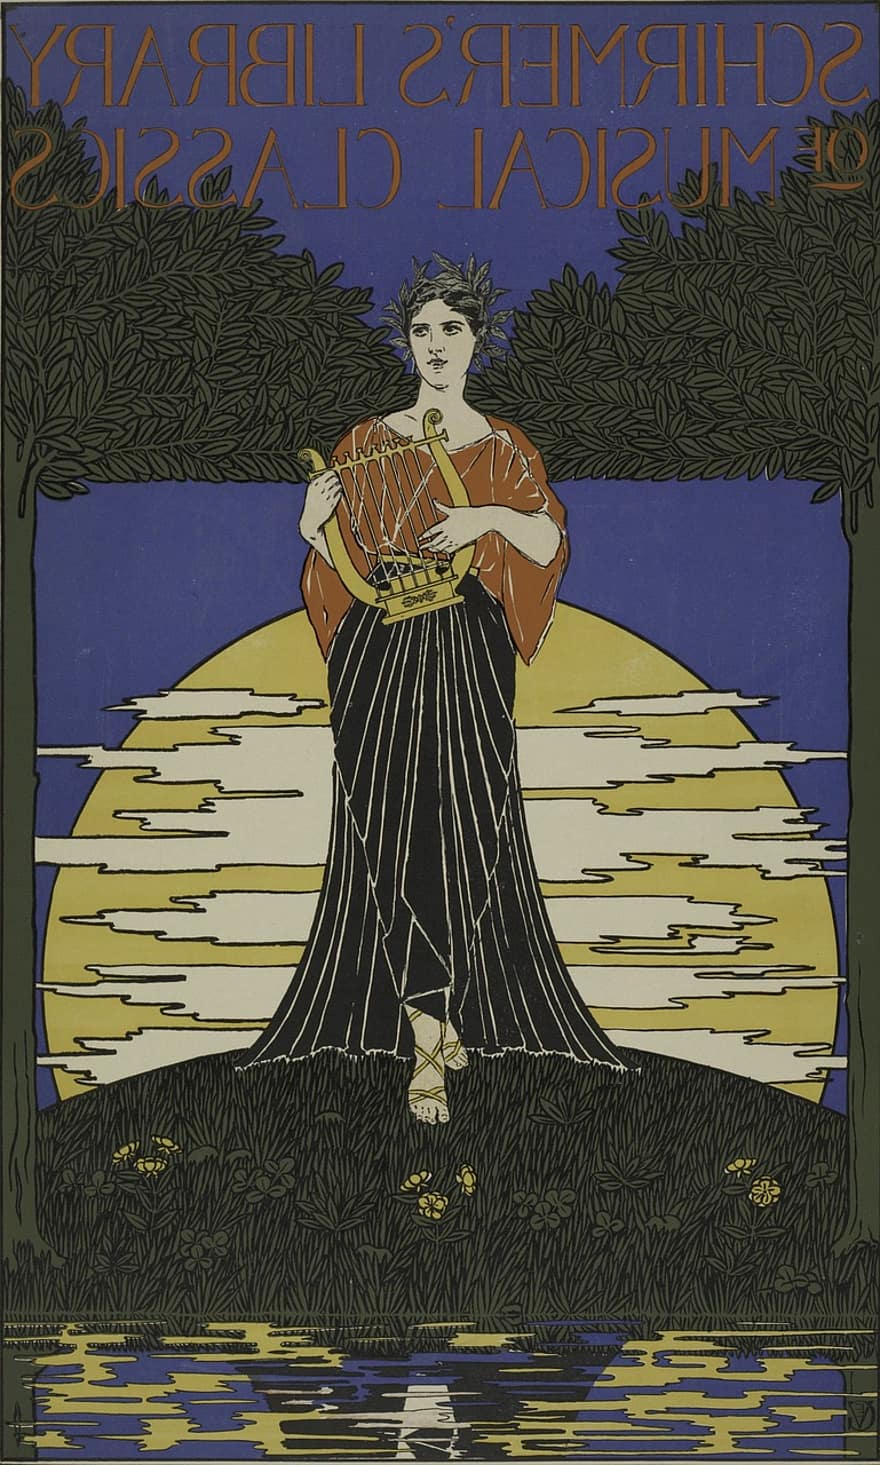 Woman, Harp, Moon, Lake, Reflection, Music, Poster